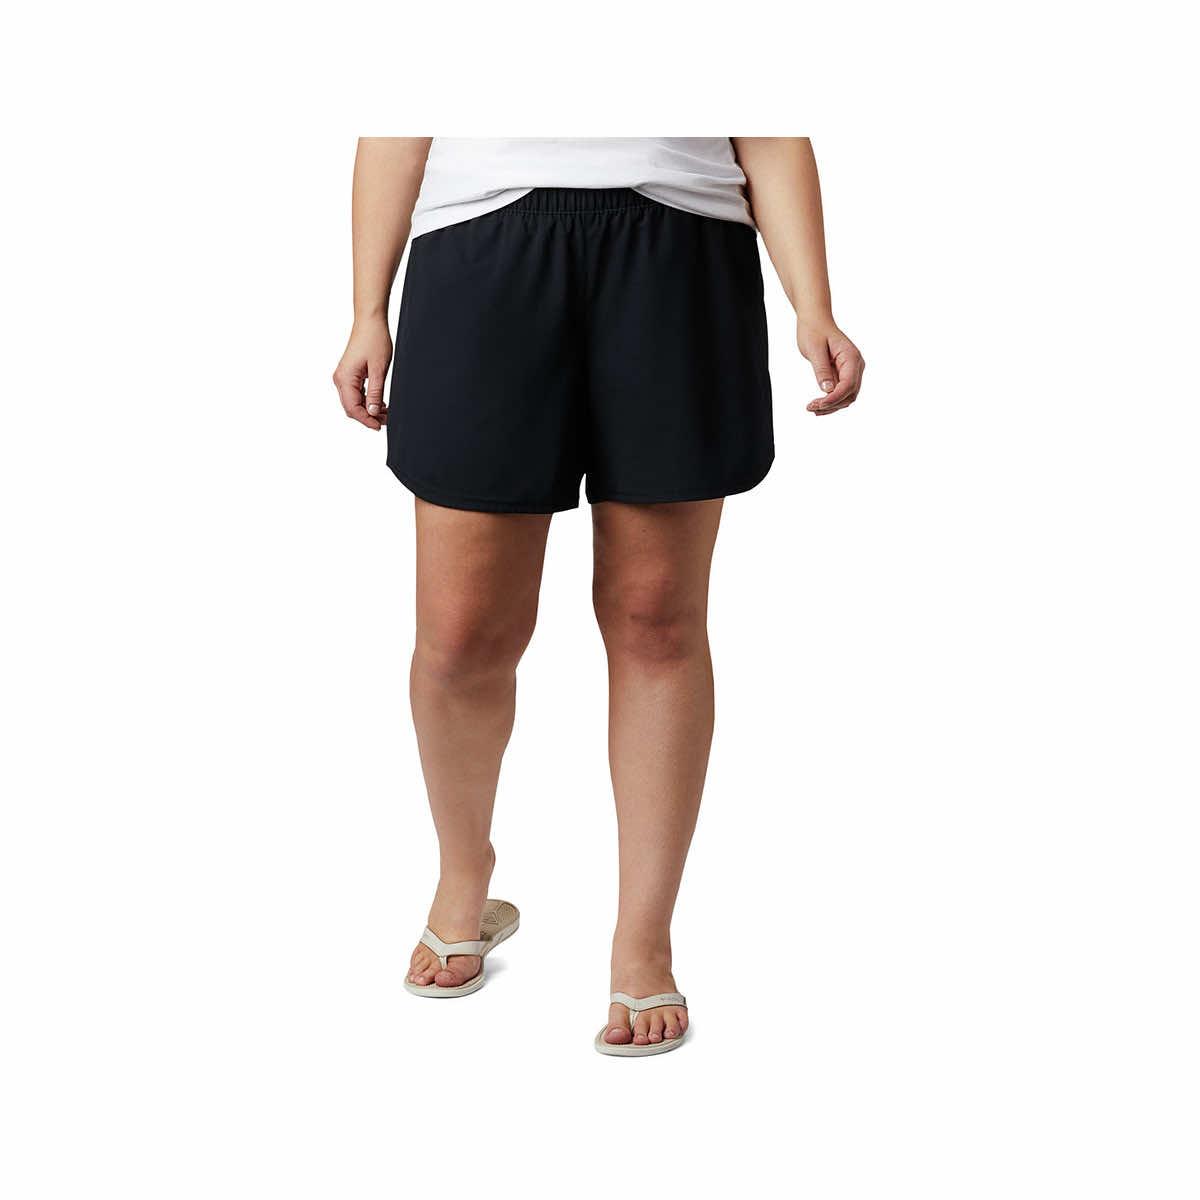  Women's Pfg Tamiami Pull On Shorts - Curvy